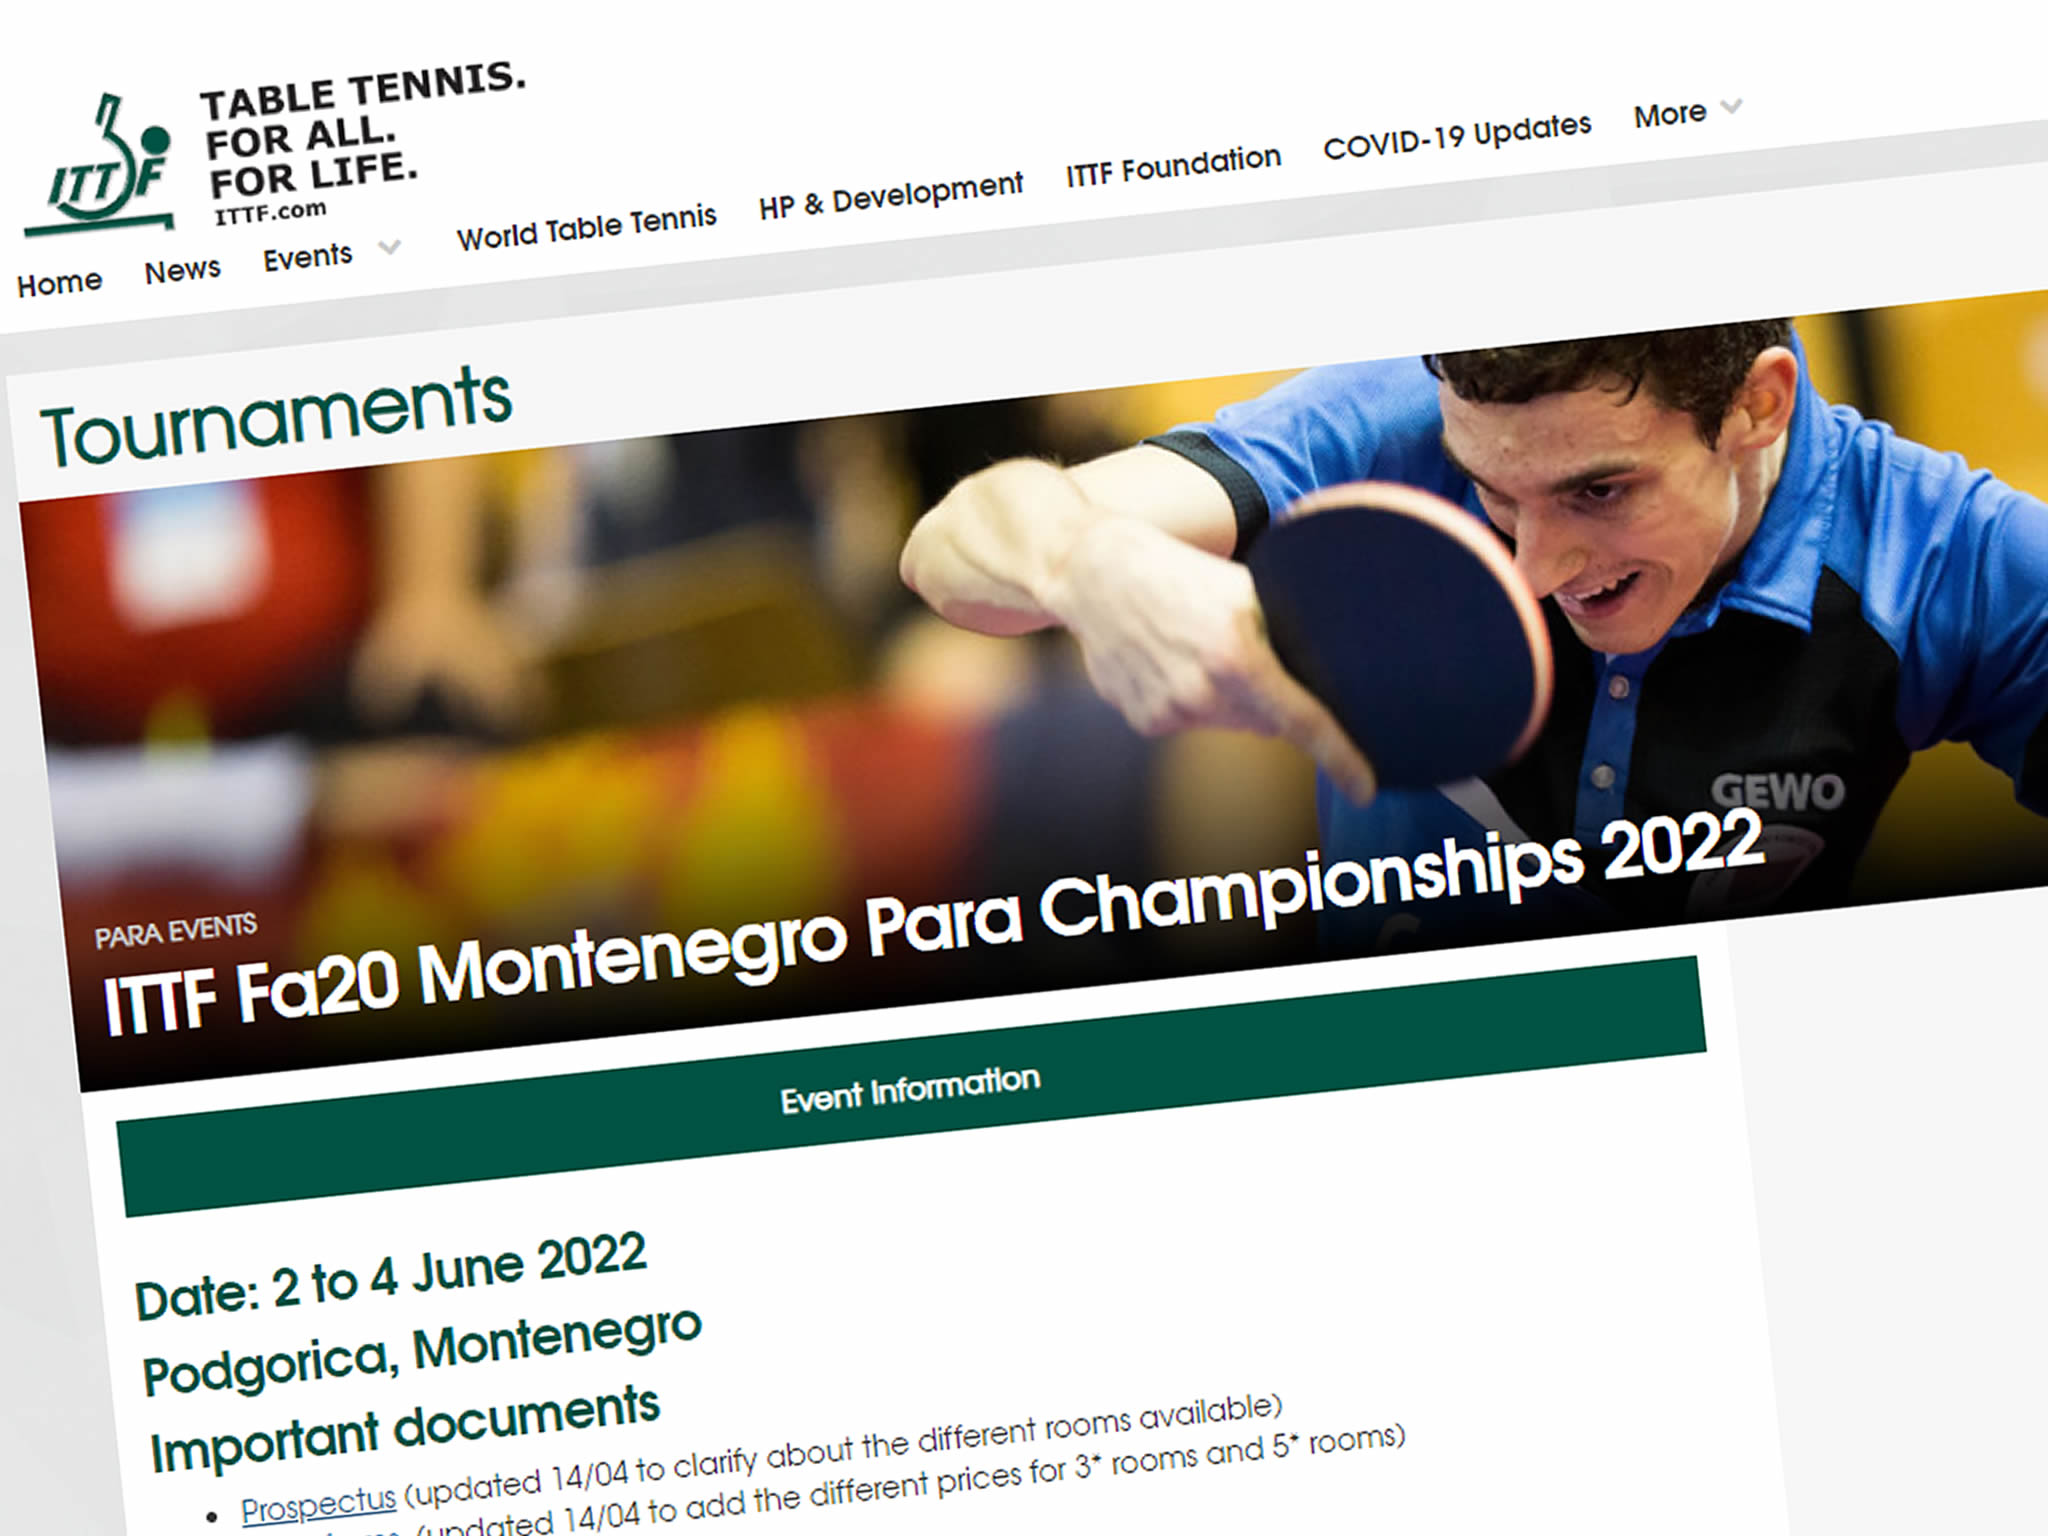 ITTF Fa20 Montenegro Para Championships 2022